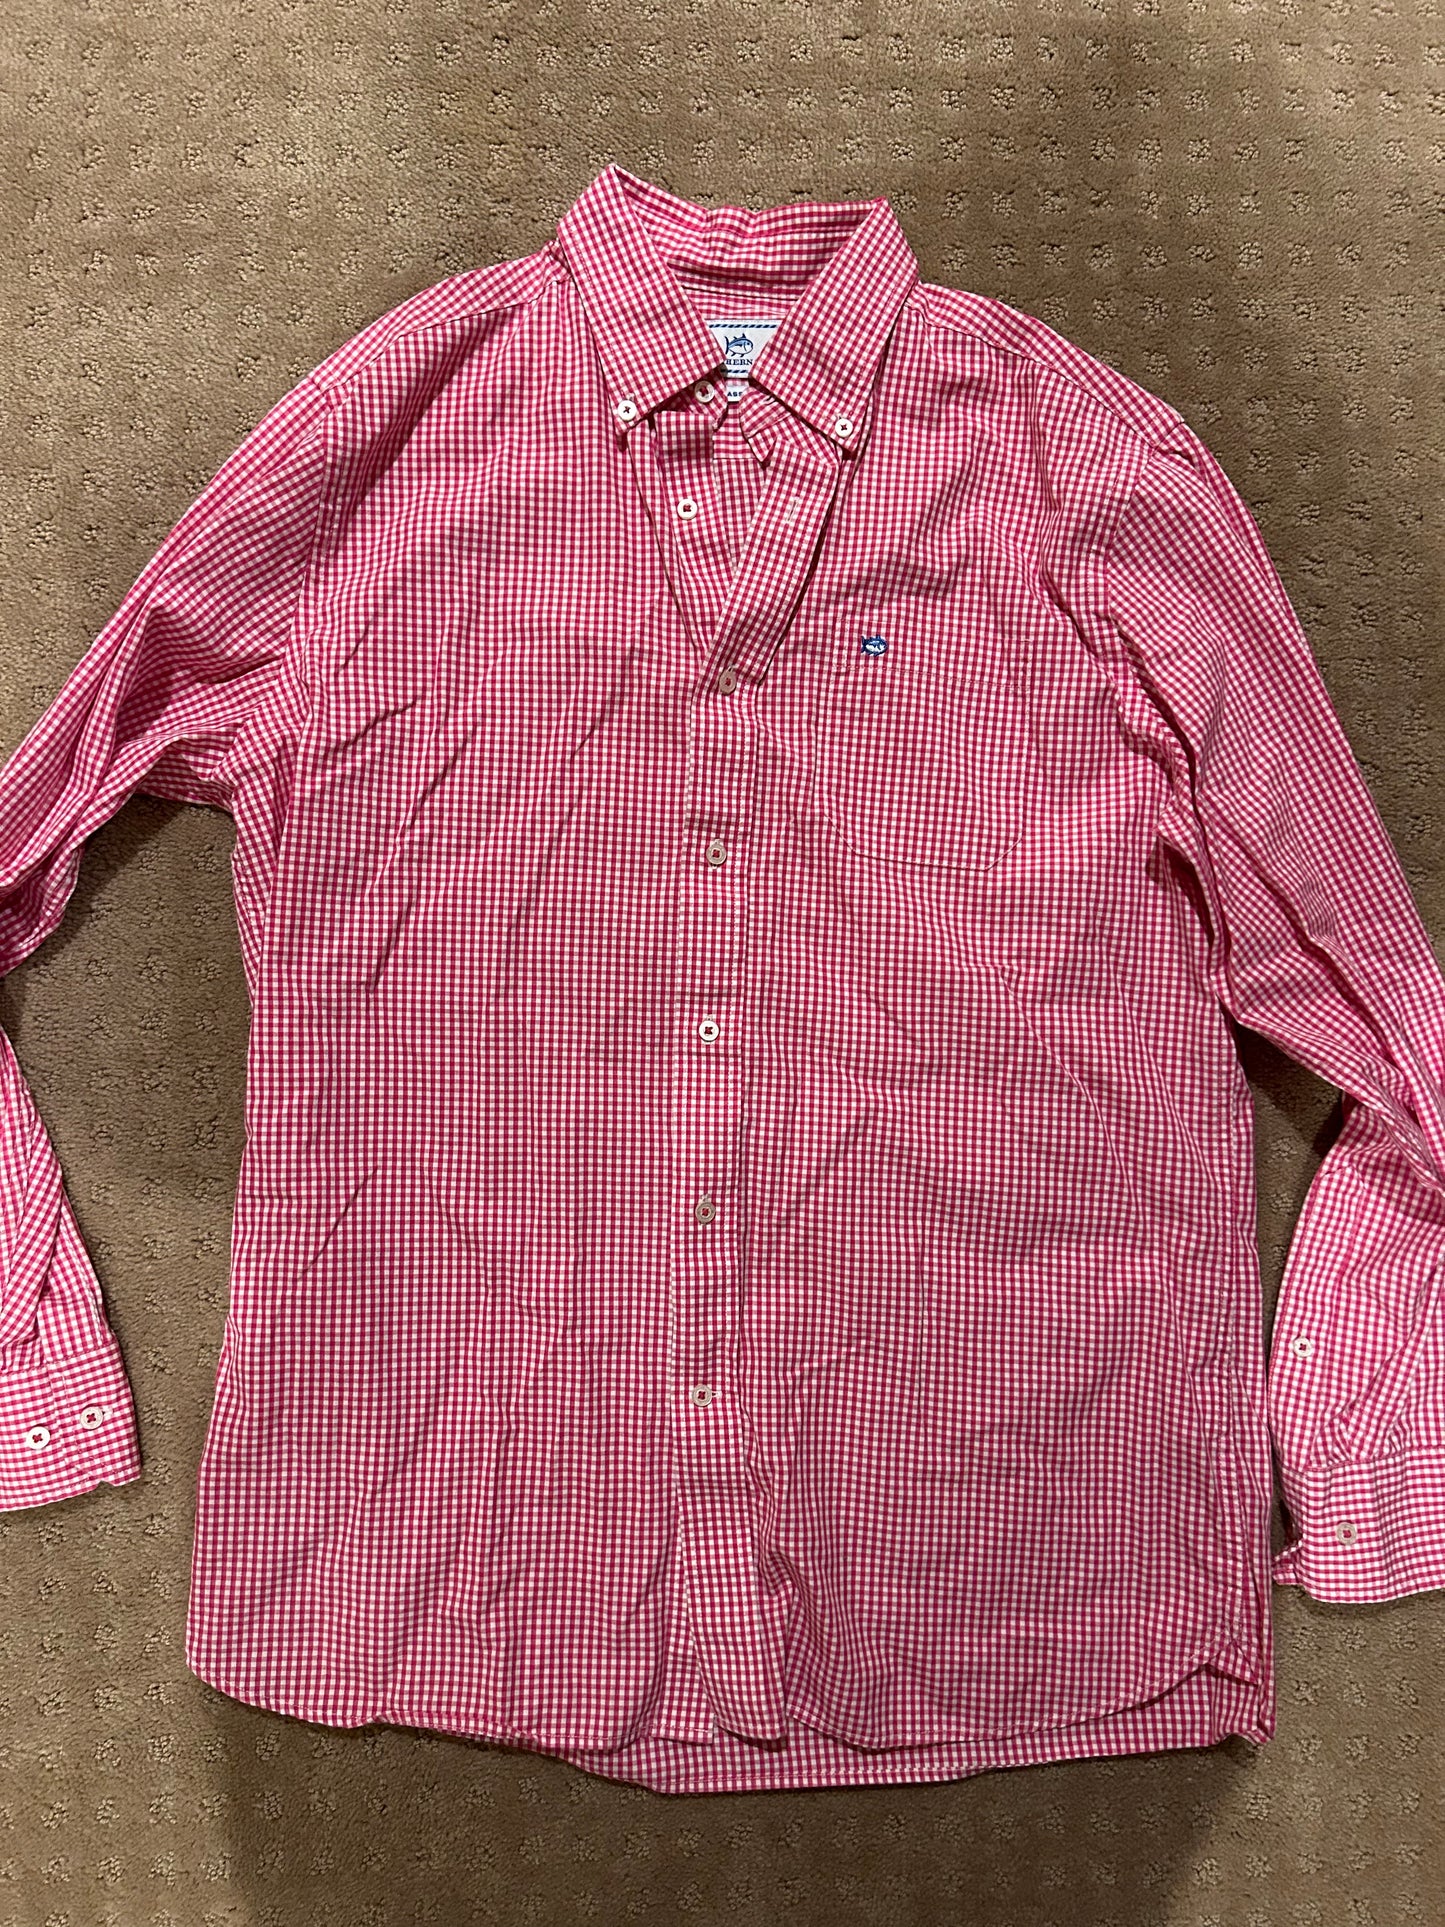 Men’s Southern Tide Shirt Size M Hot Pink Gingham